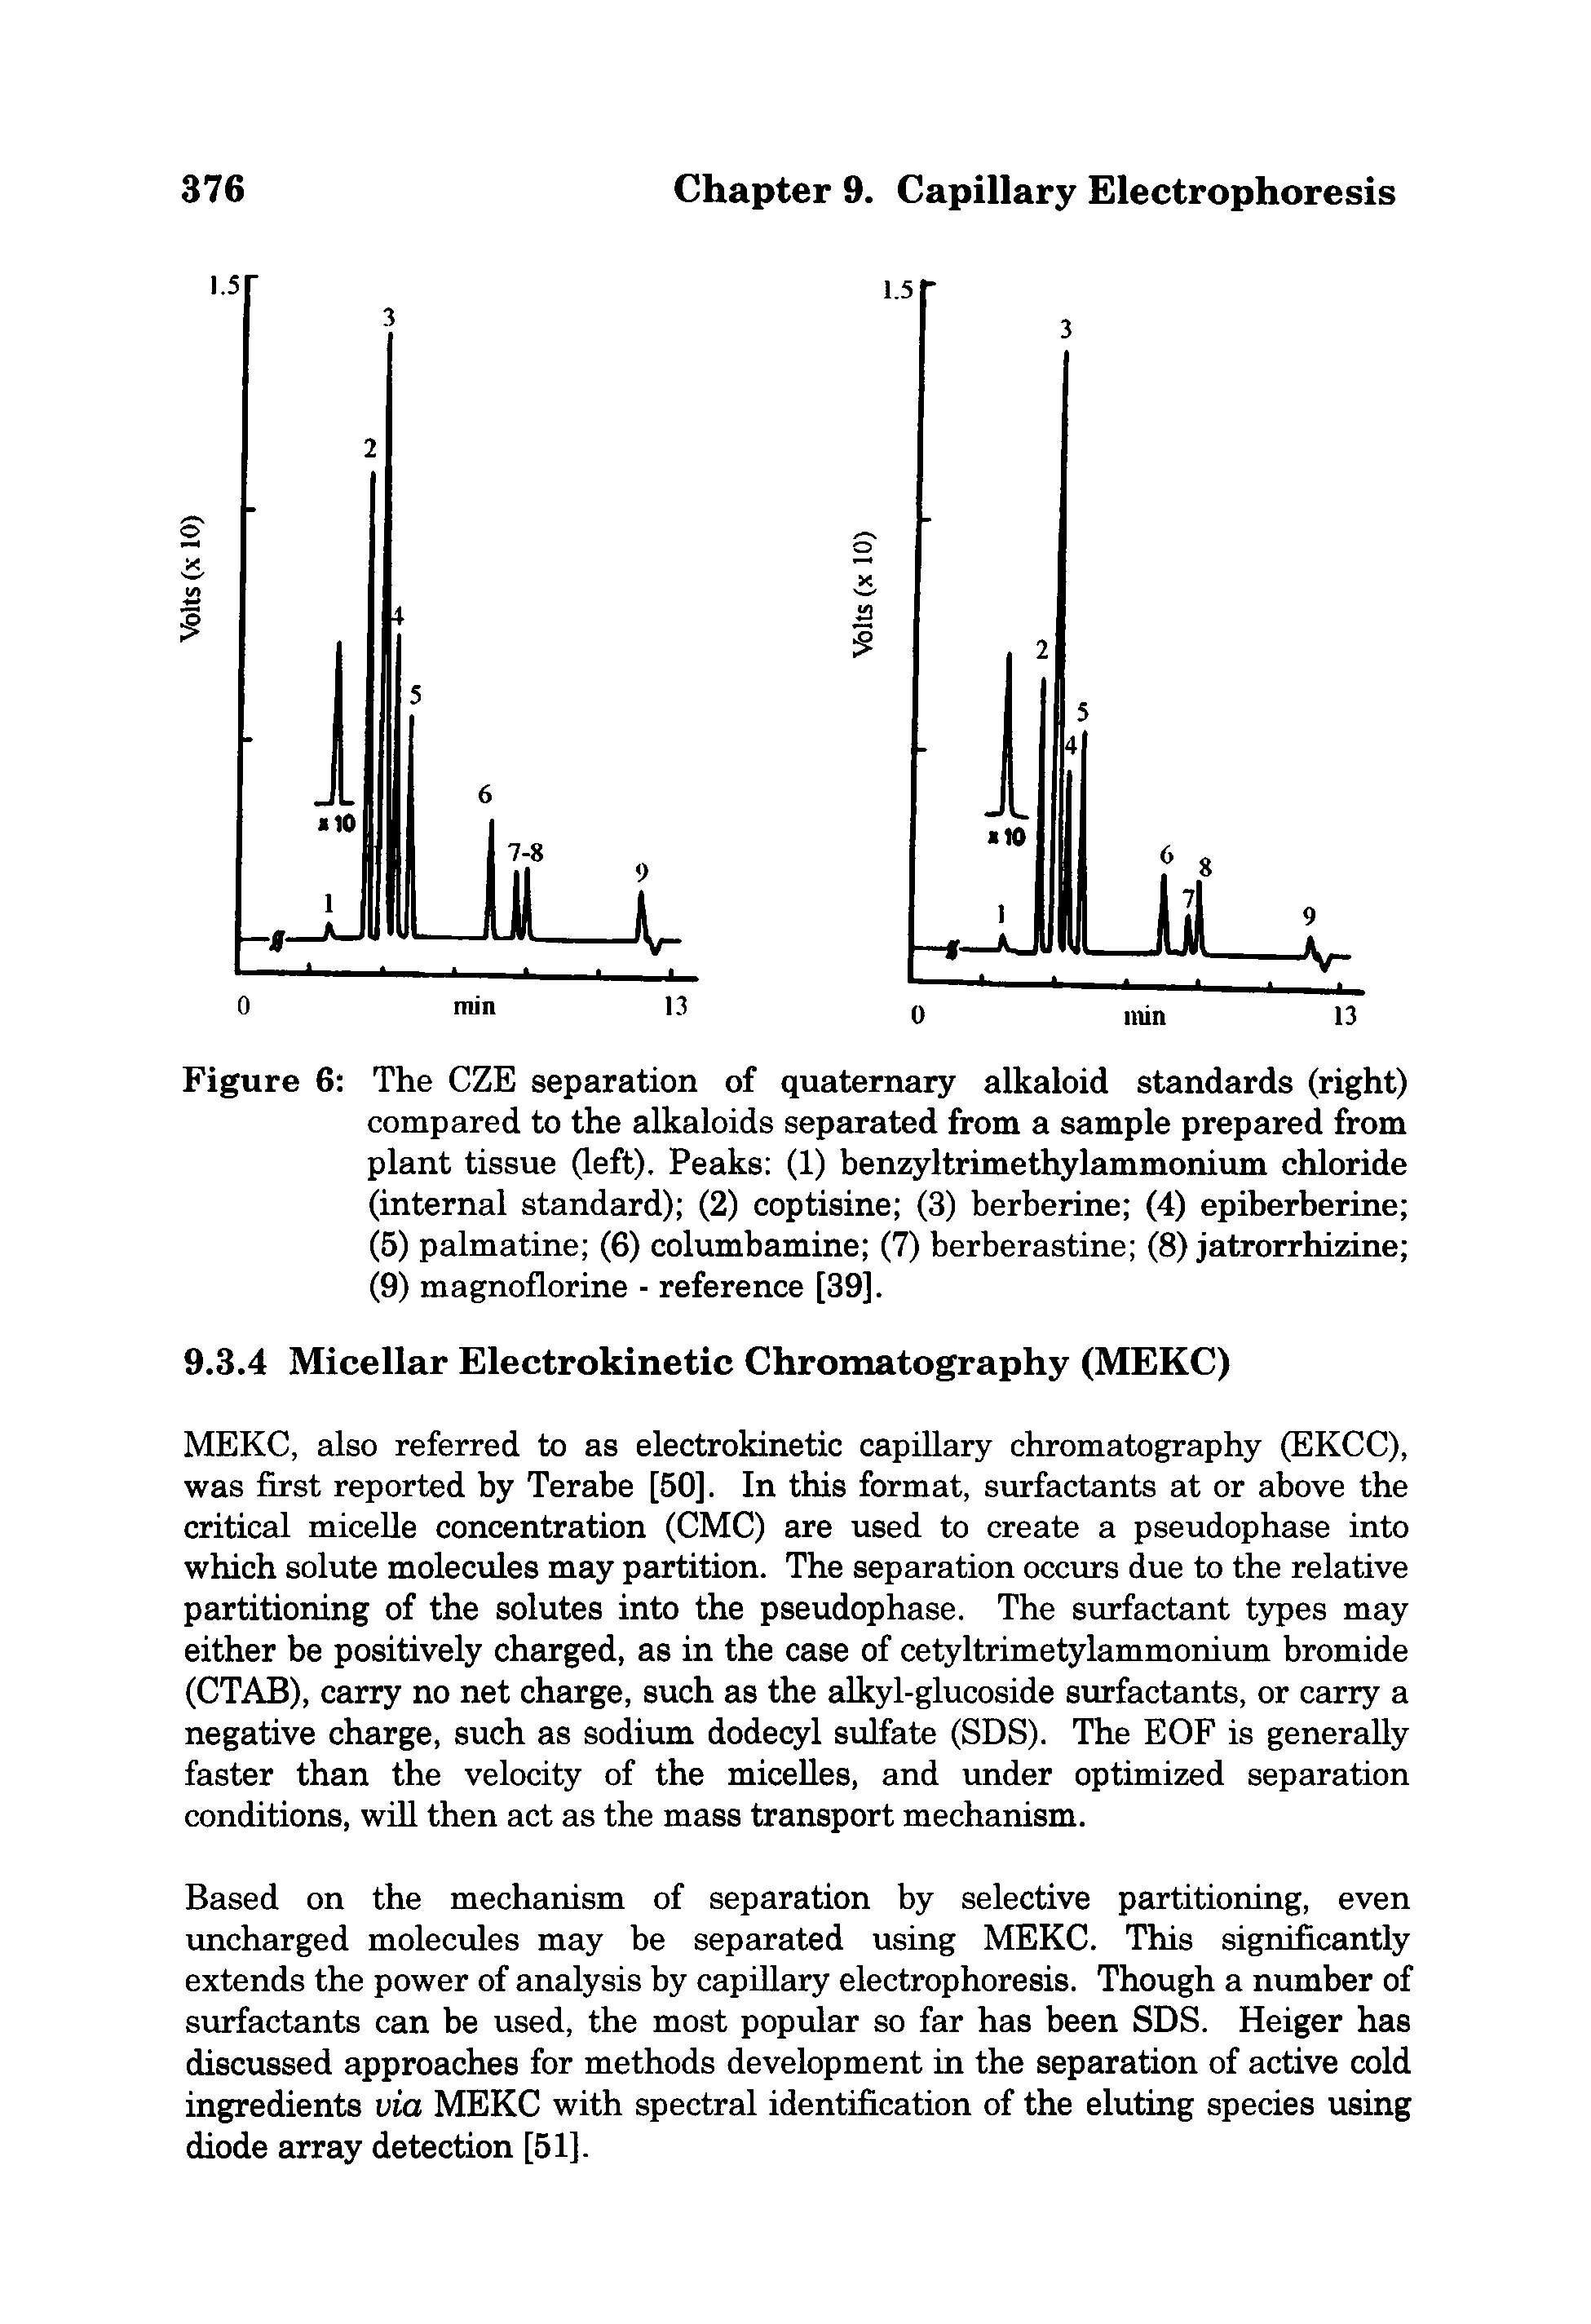 Figure 6 The CZE separation of quaternary alkaloid standards (right) compared to the alkaloids separated from a sample prepared from plant tissue (left). Peaks (1) benzyltrimethylammonium chloride (internal standard) (2) coptisine (3) berberine (4) epiberberine ...